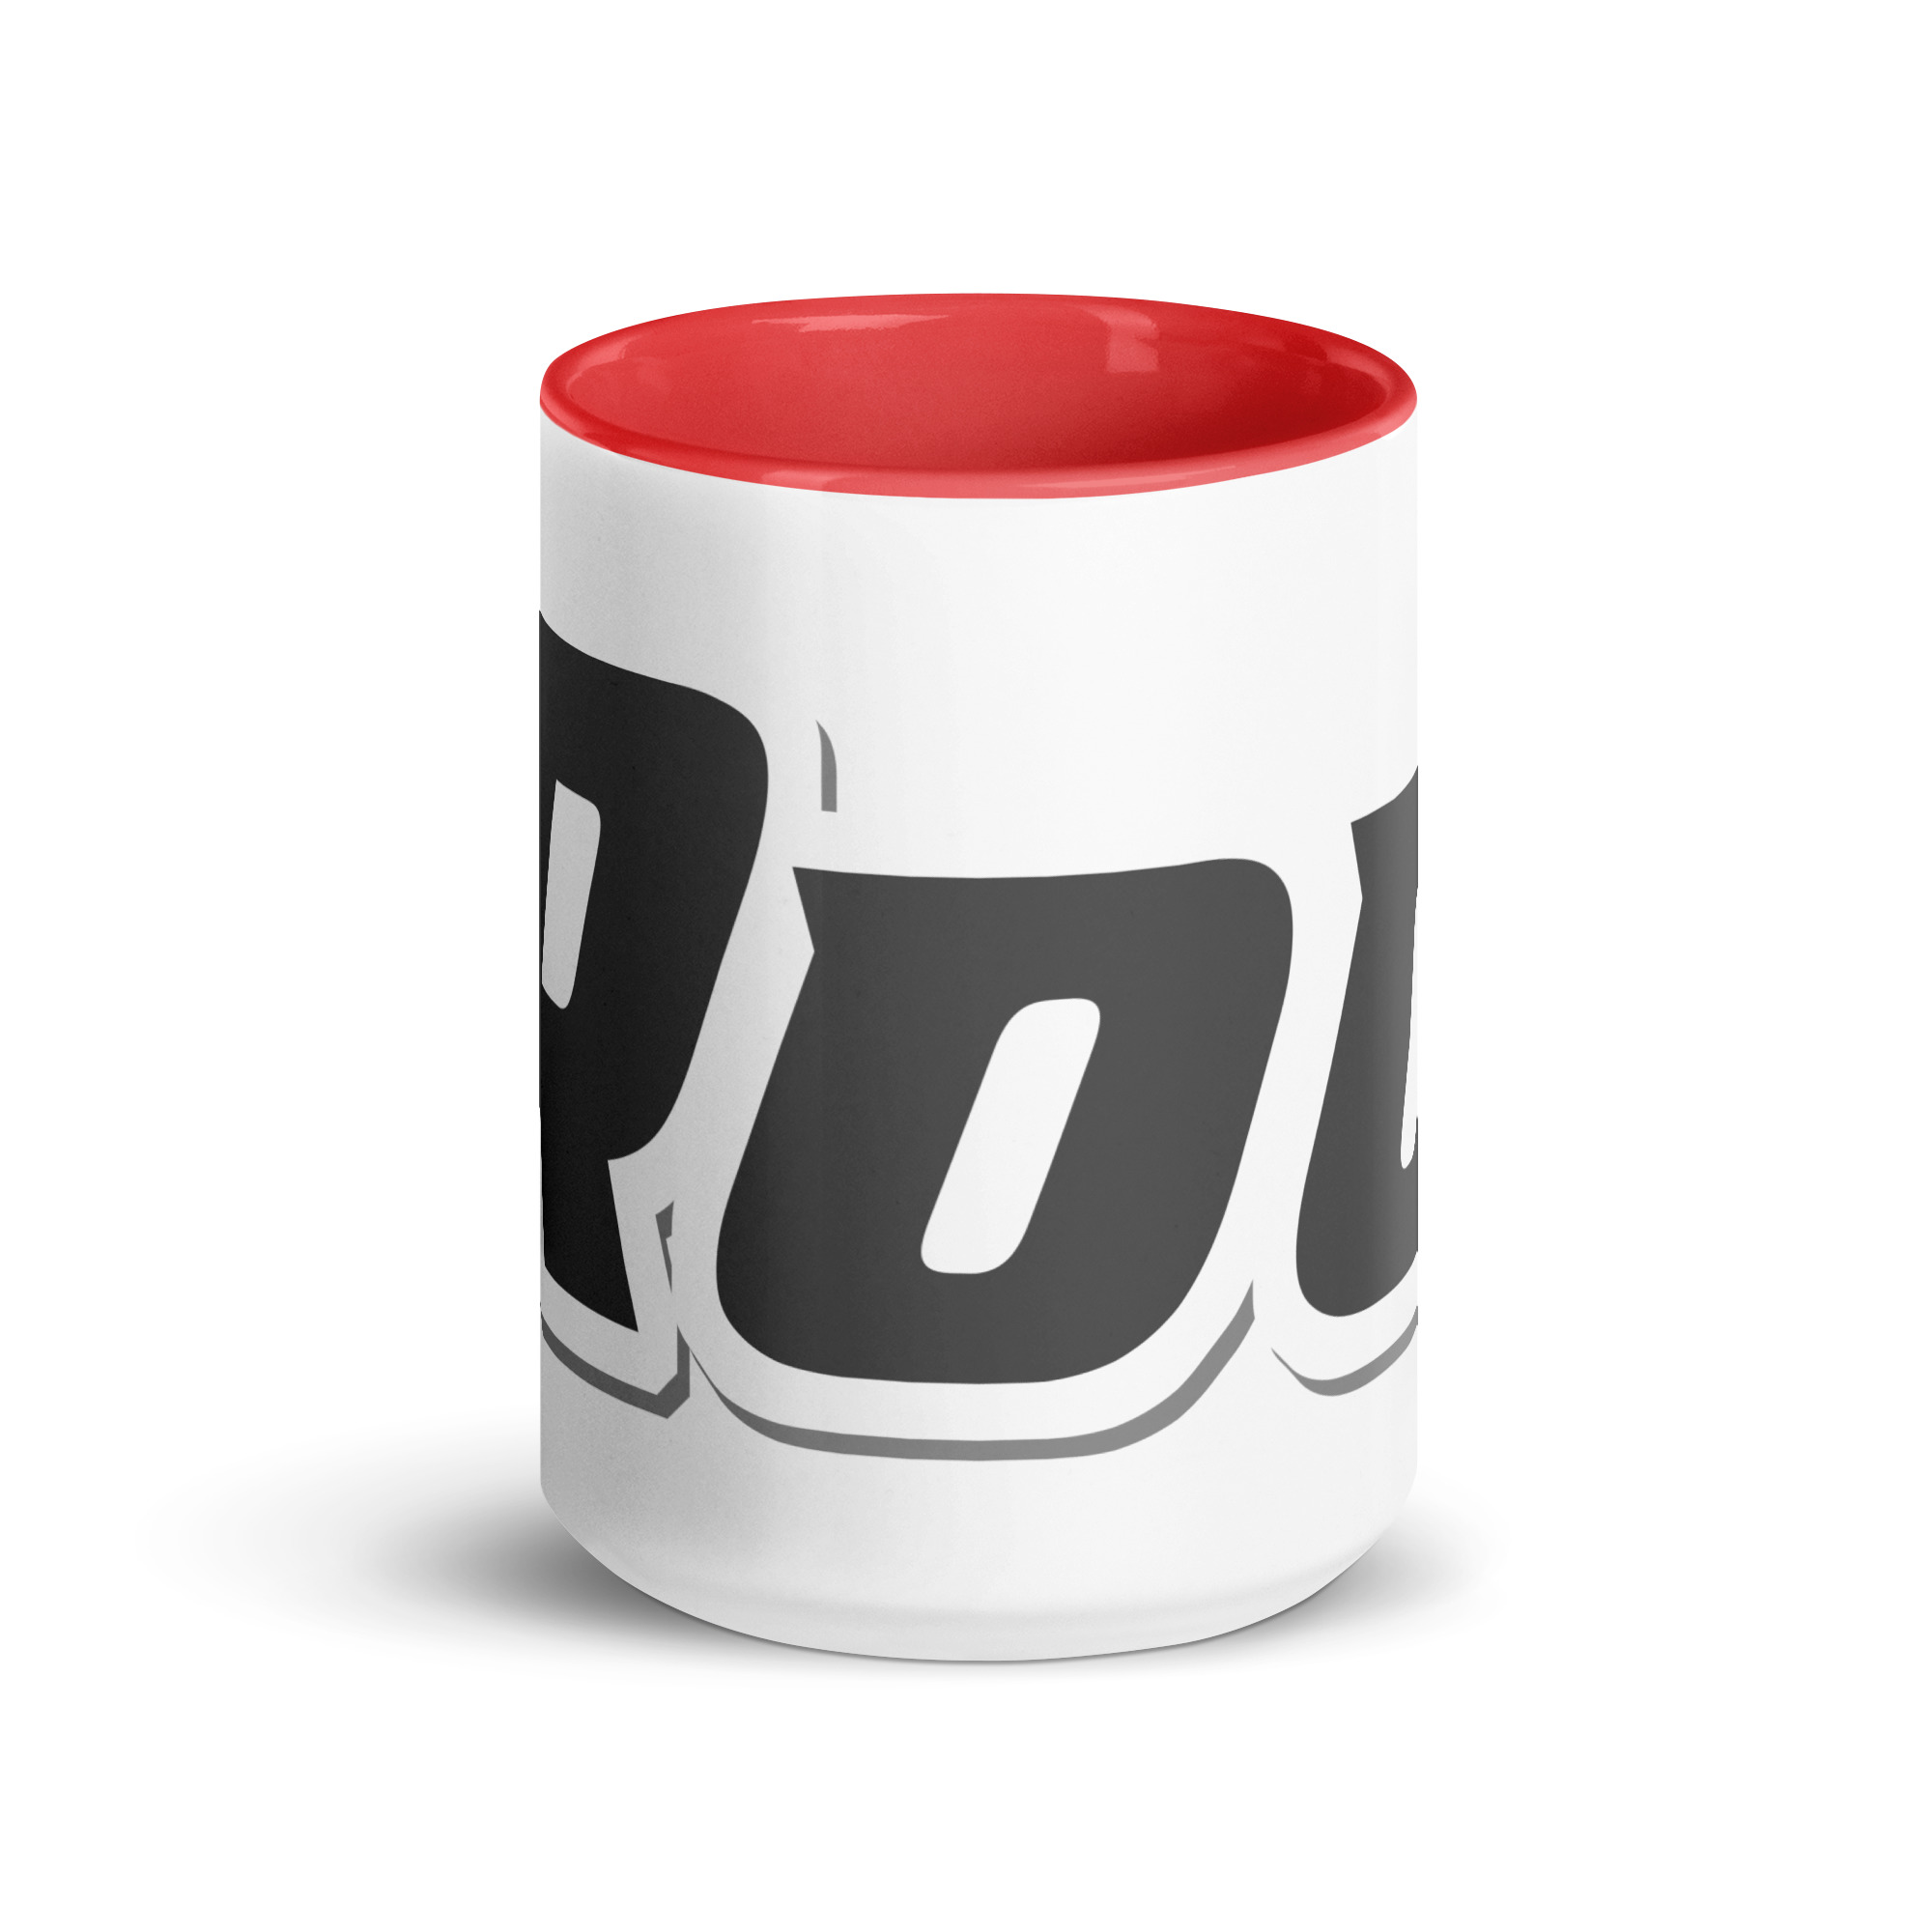 white-ceramic-mug-with-color-inside-red-15-oz-front-6525b6484c306.jpg